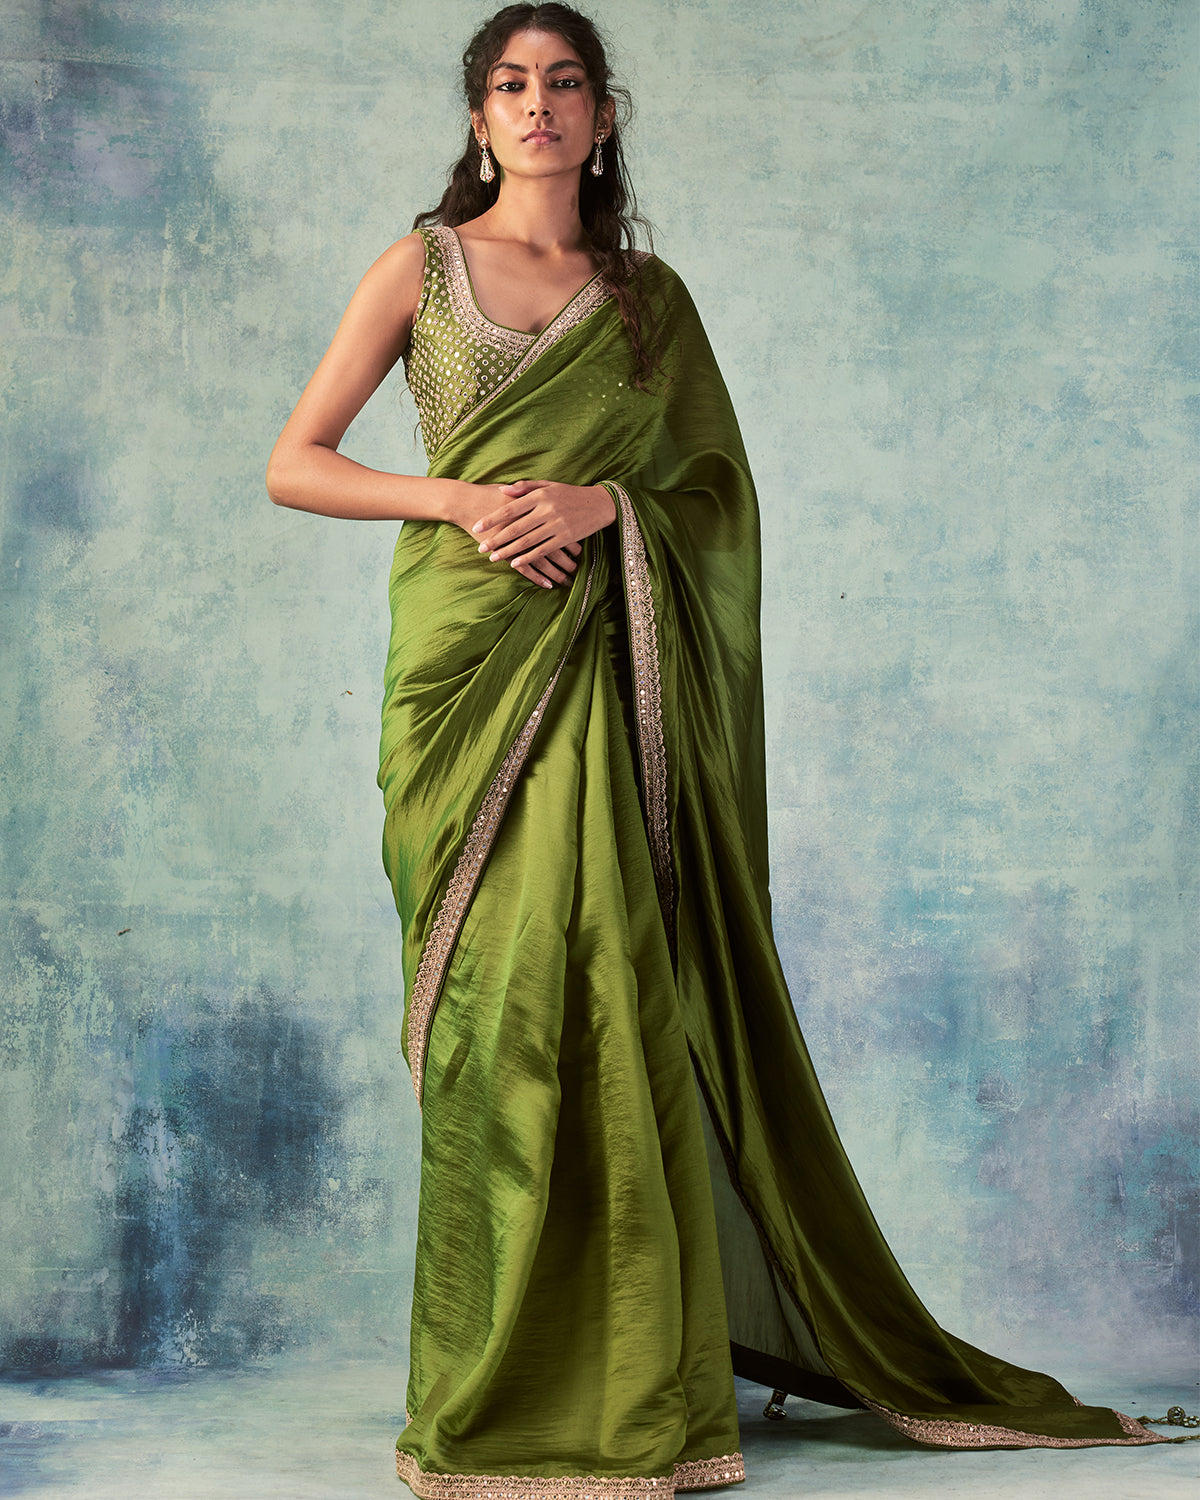 Olive Green Sari Set by Punit Balana